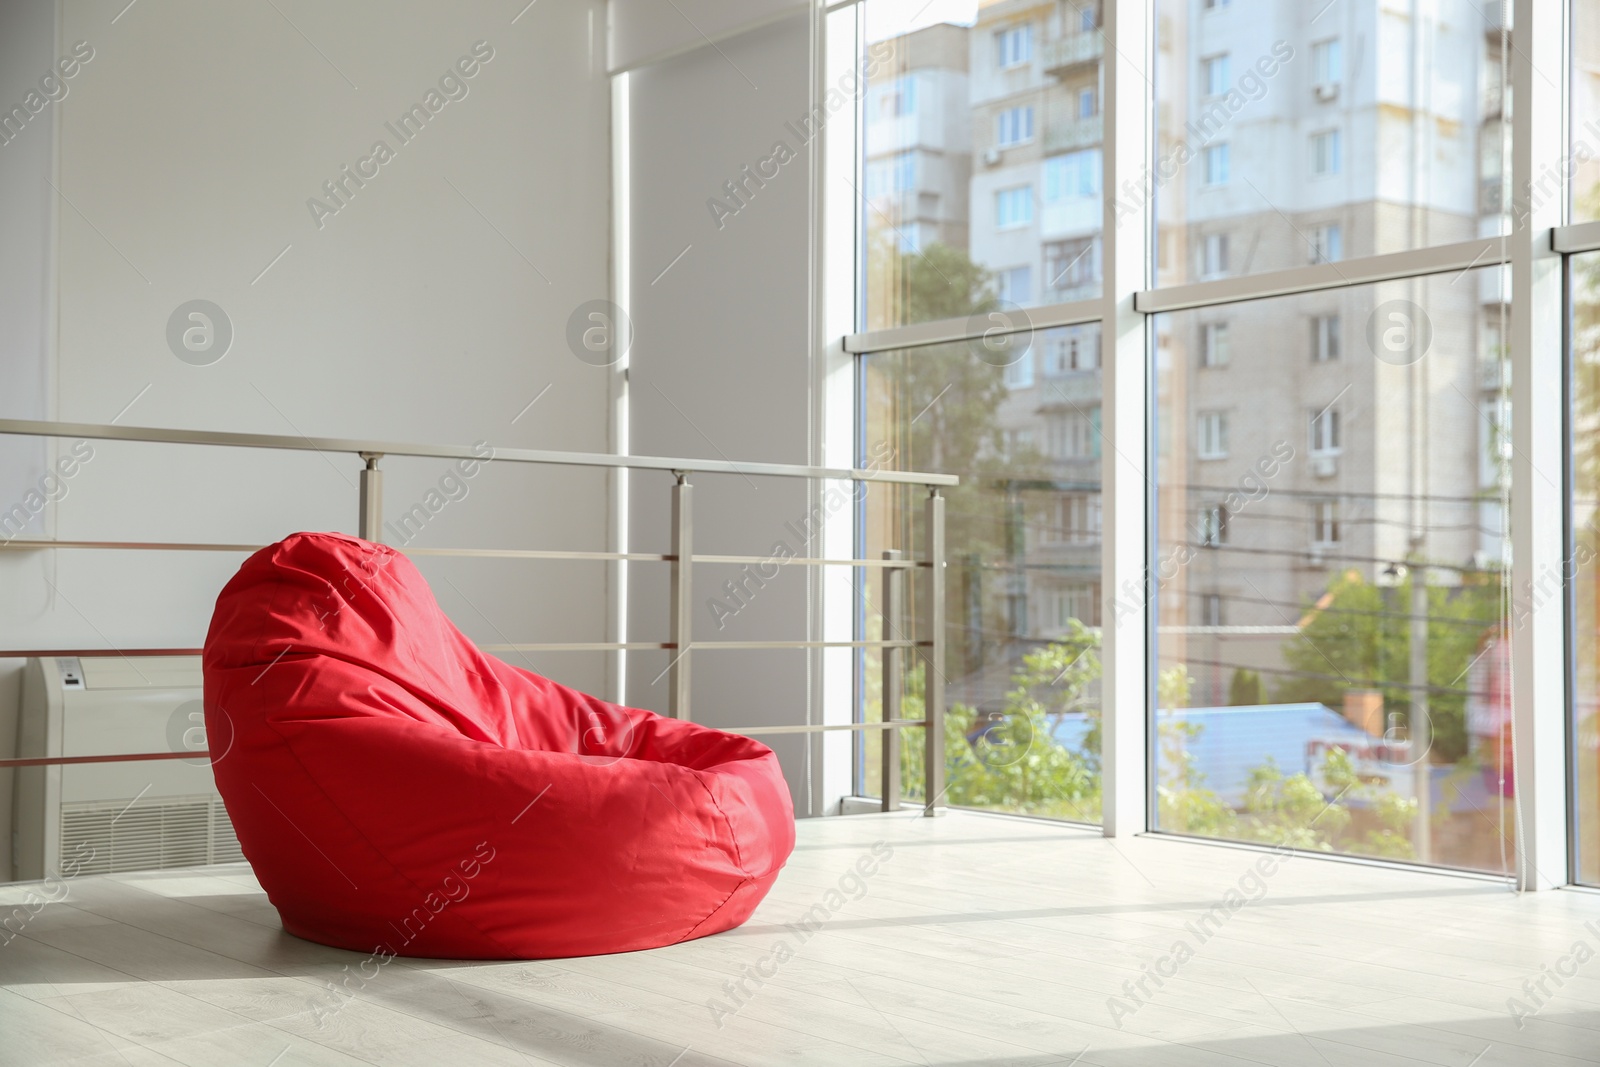 Photo of Red bean bag chair on floor near windows indoors